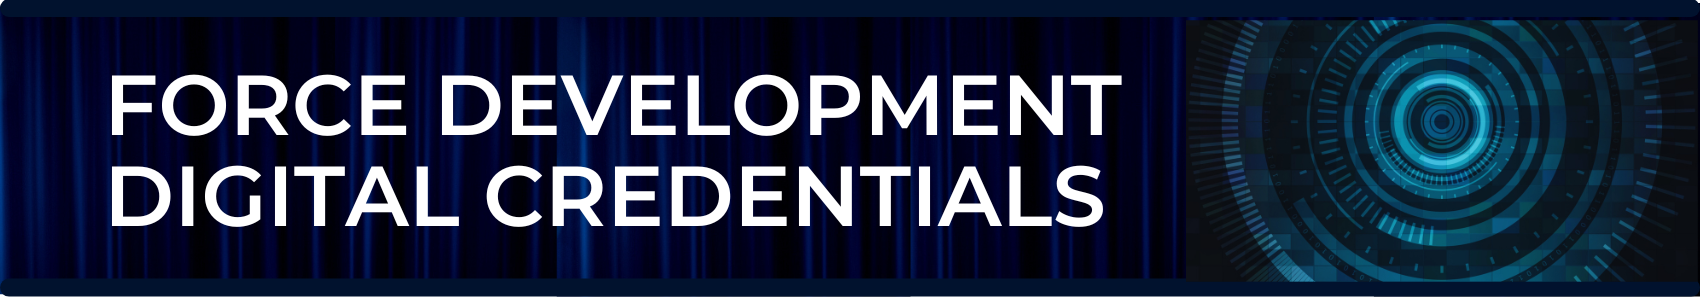 FD Digital Credentials Banner